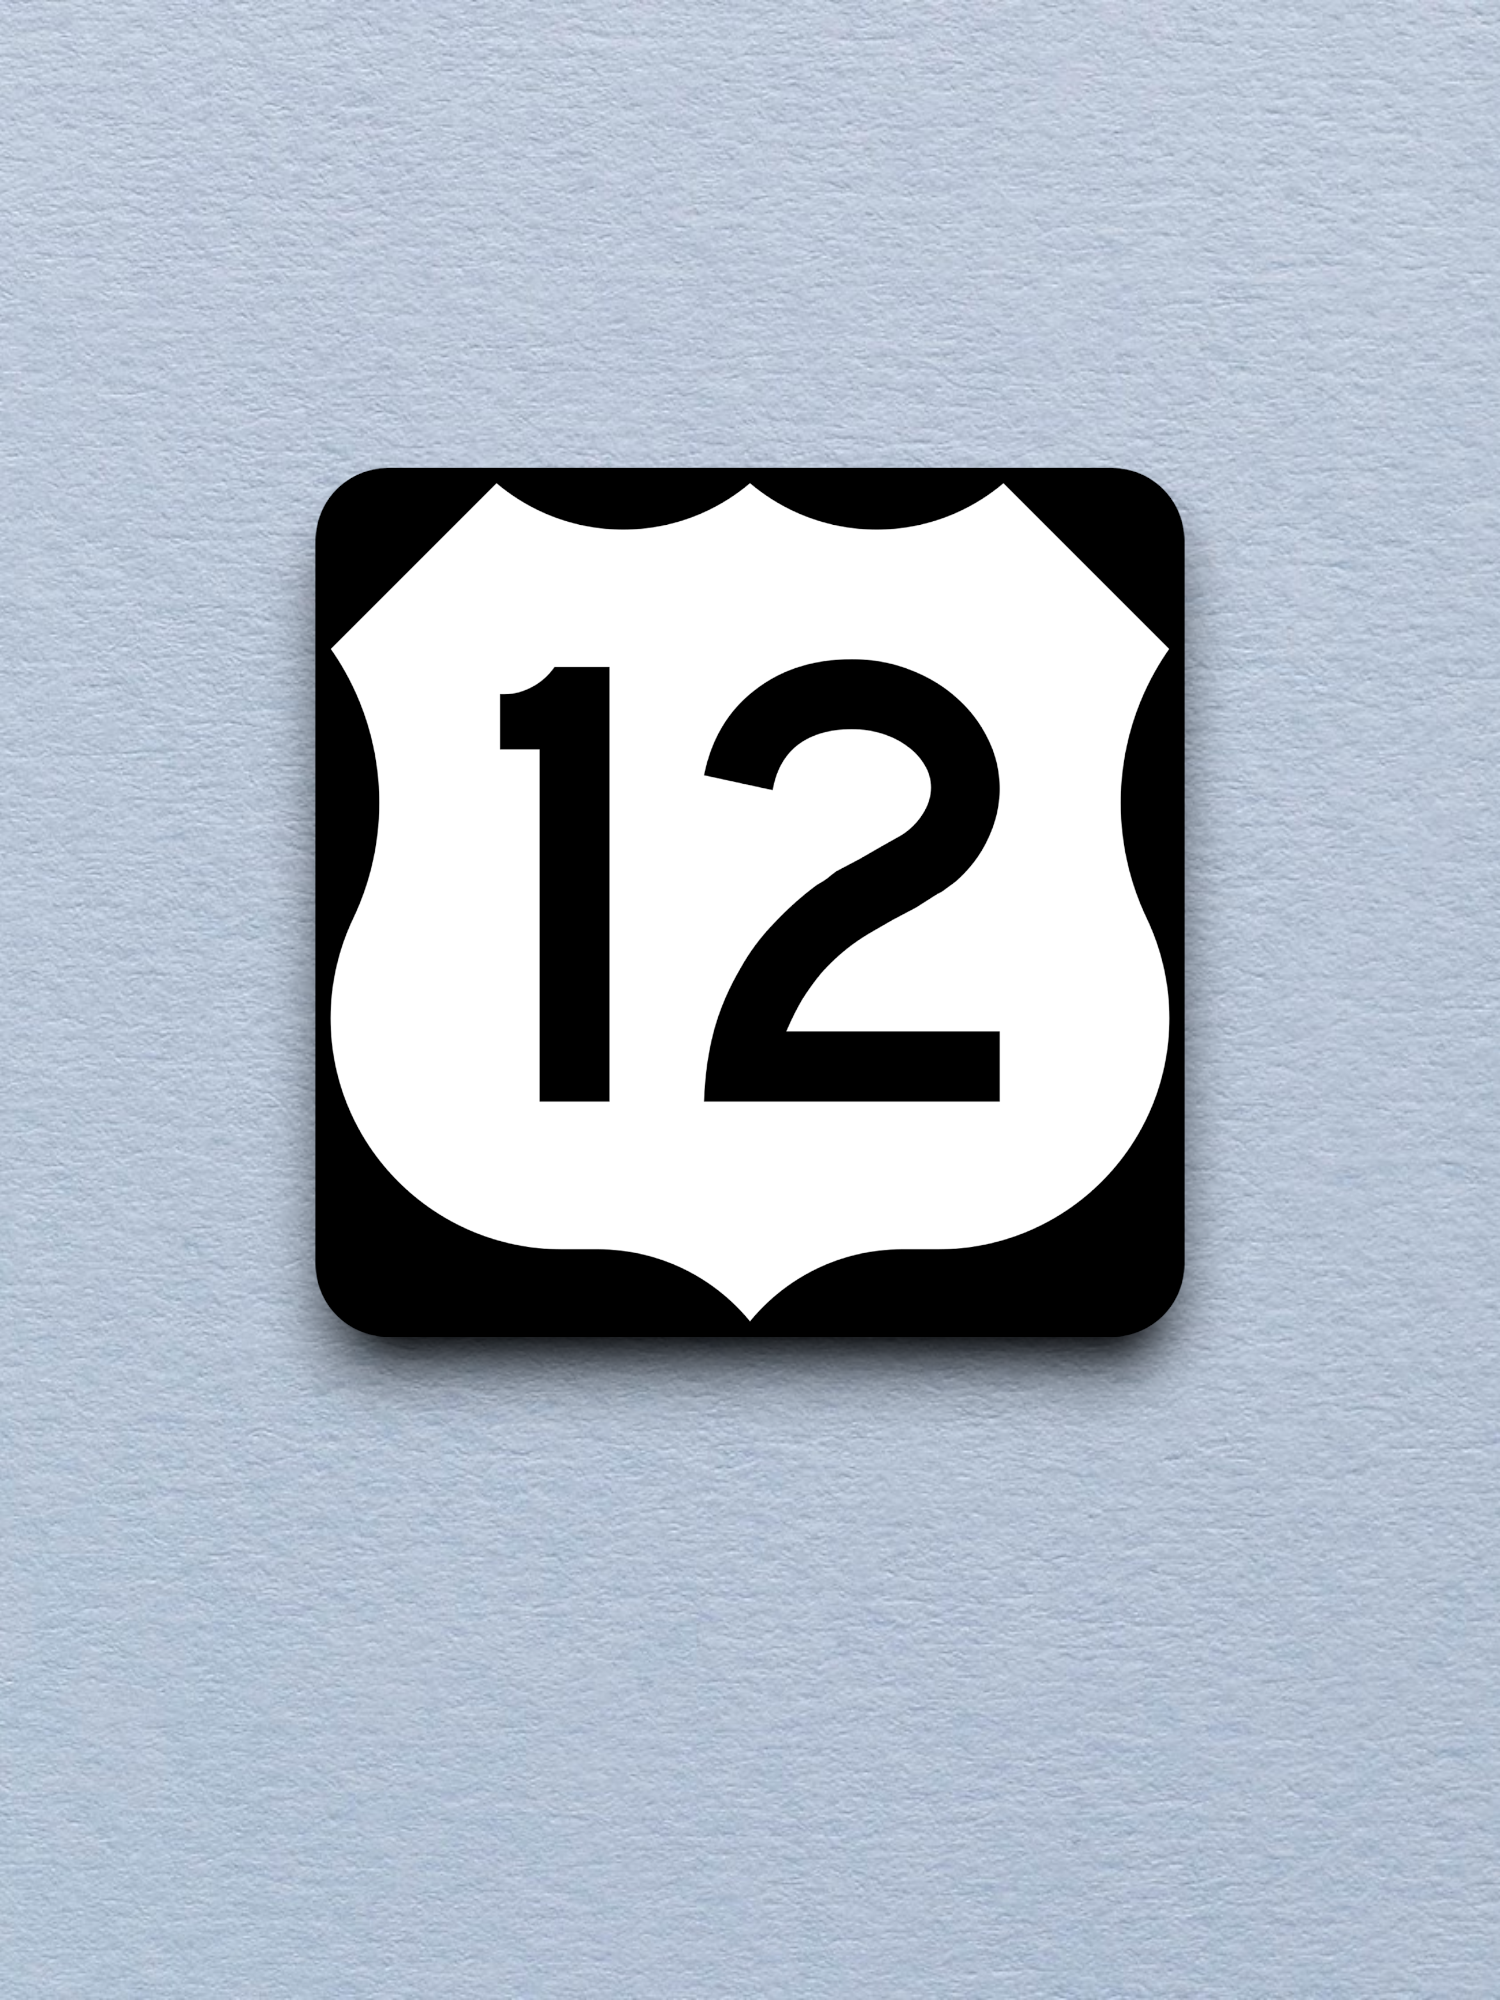 U.S. Route 12 Road Sign Sticker